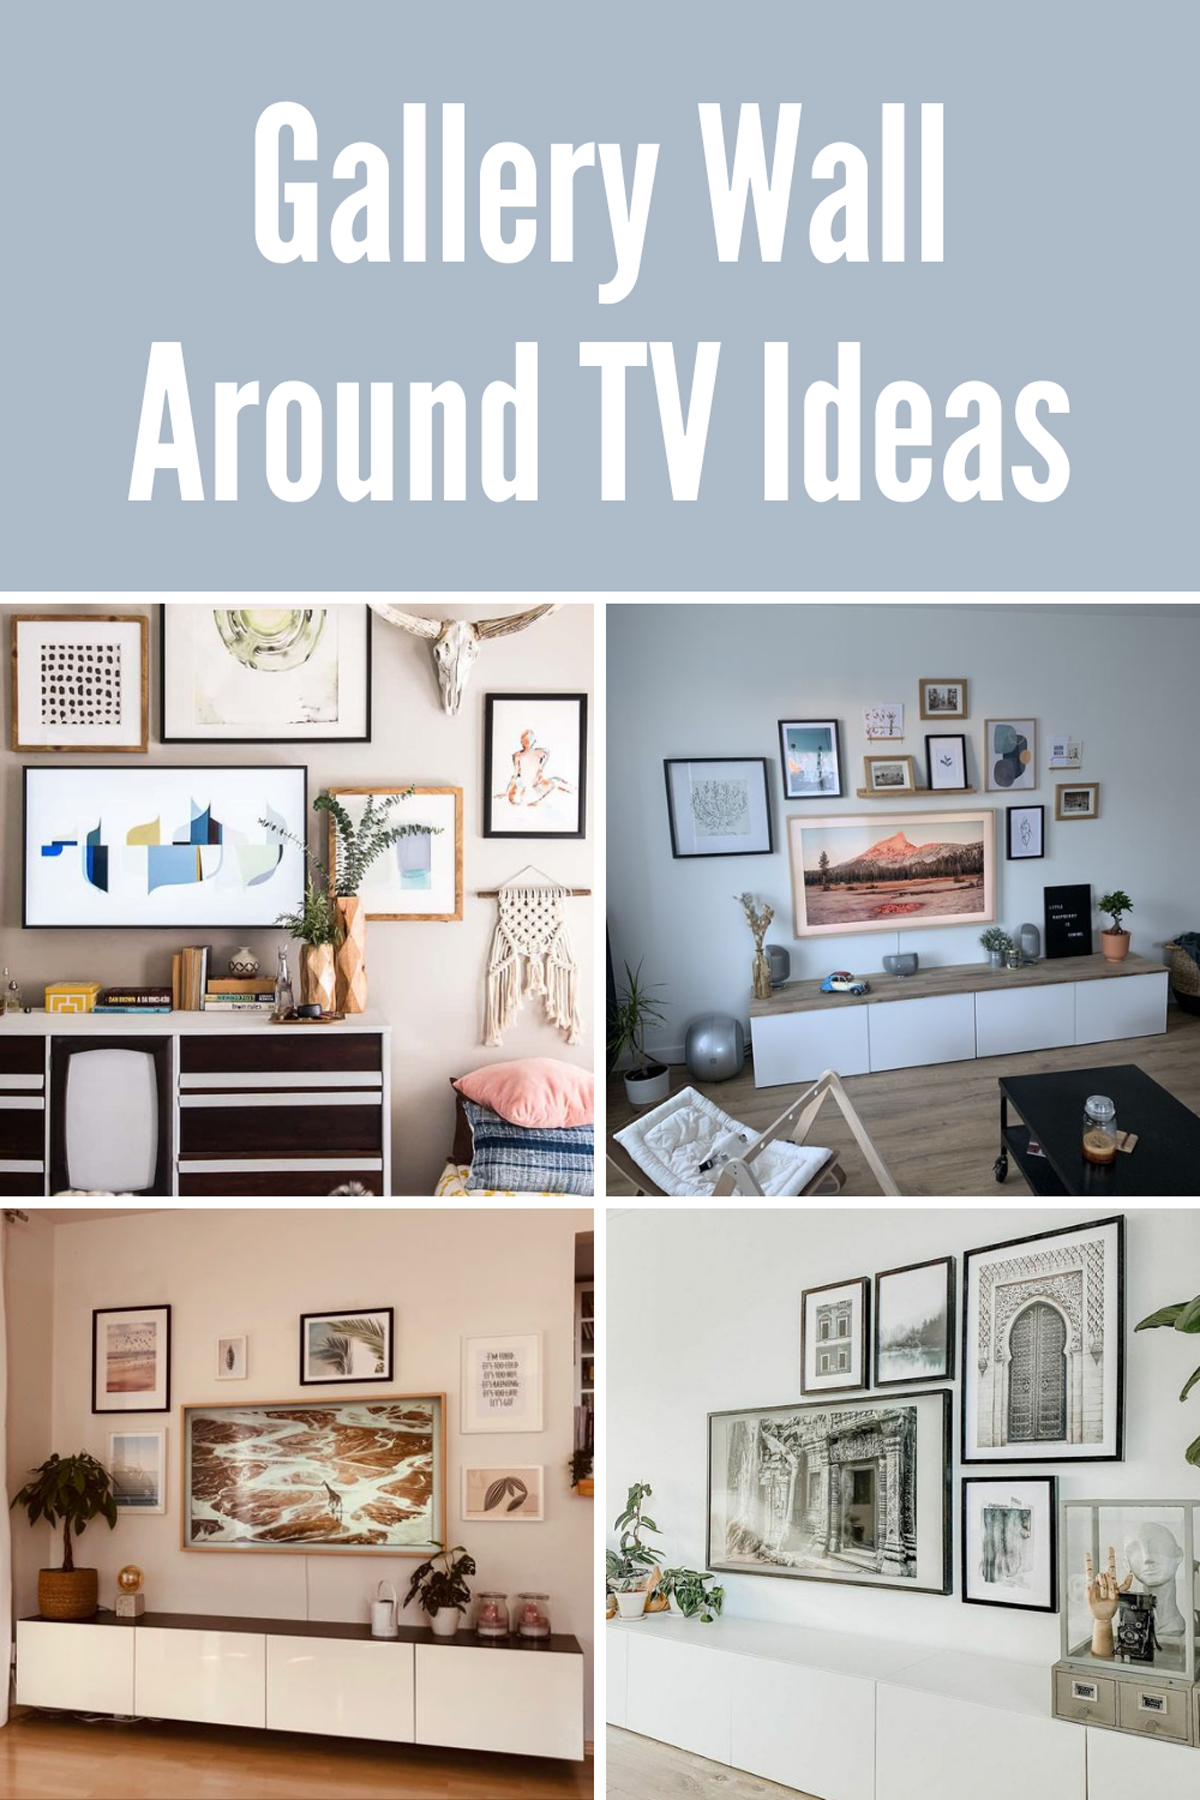 Gallery Wall Around TV Ideas